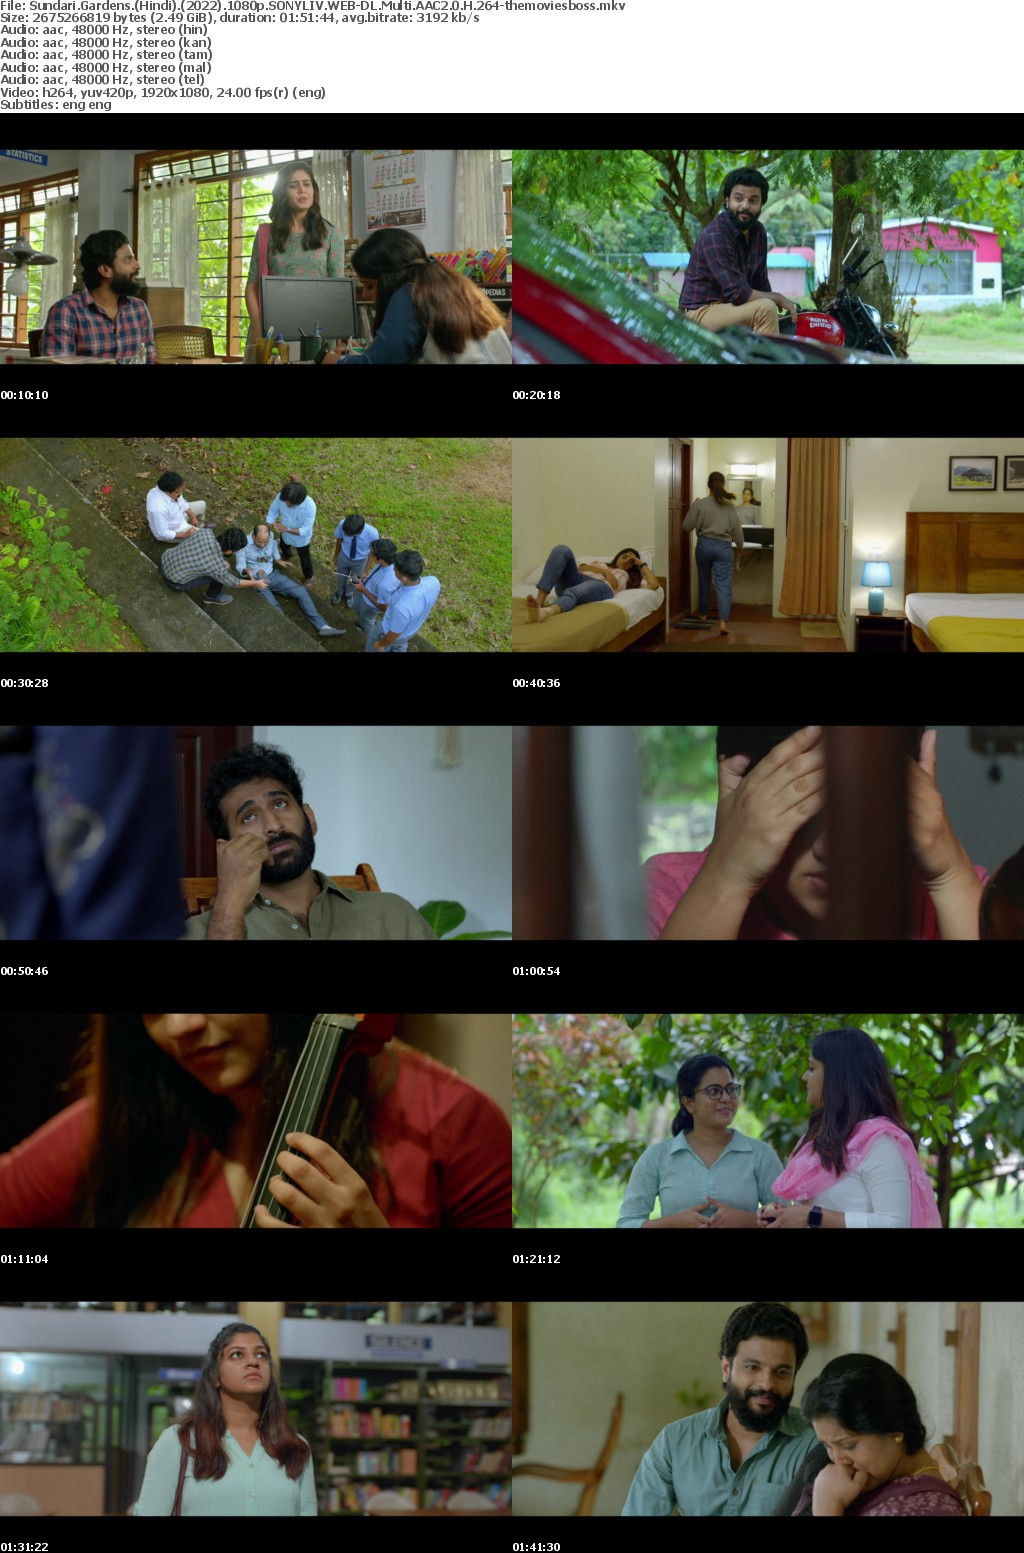 Sundari Gardens (Hindi) (2022) 1080p SONYLIV WEB-DL Multi AAC2 0 H 264-themoviesboss